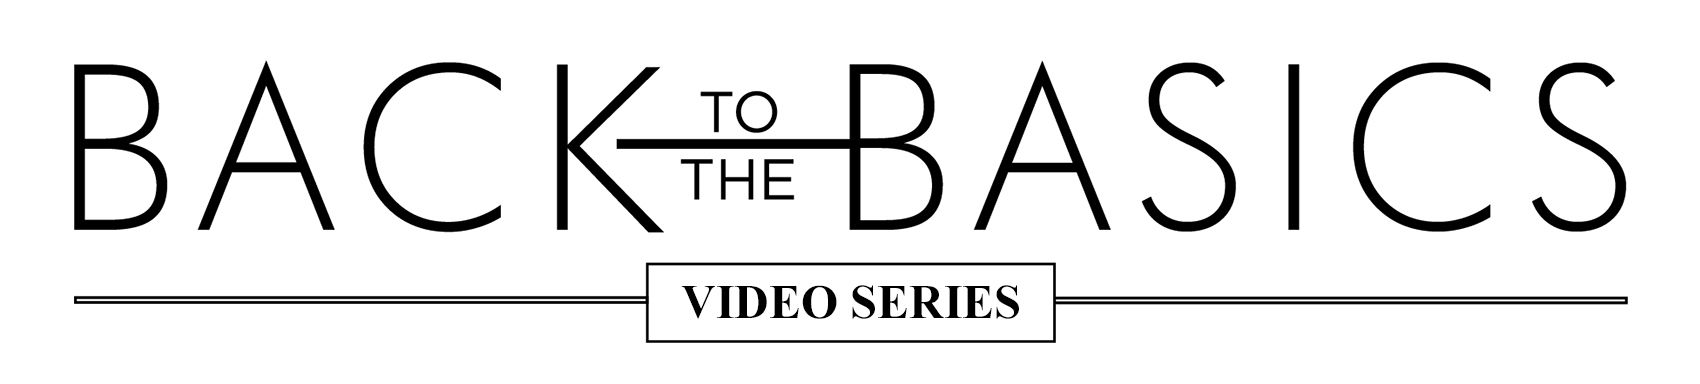 Back to Basics Video Series